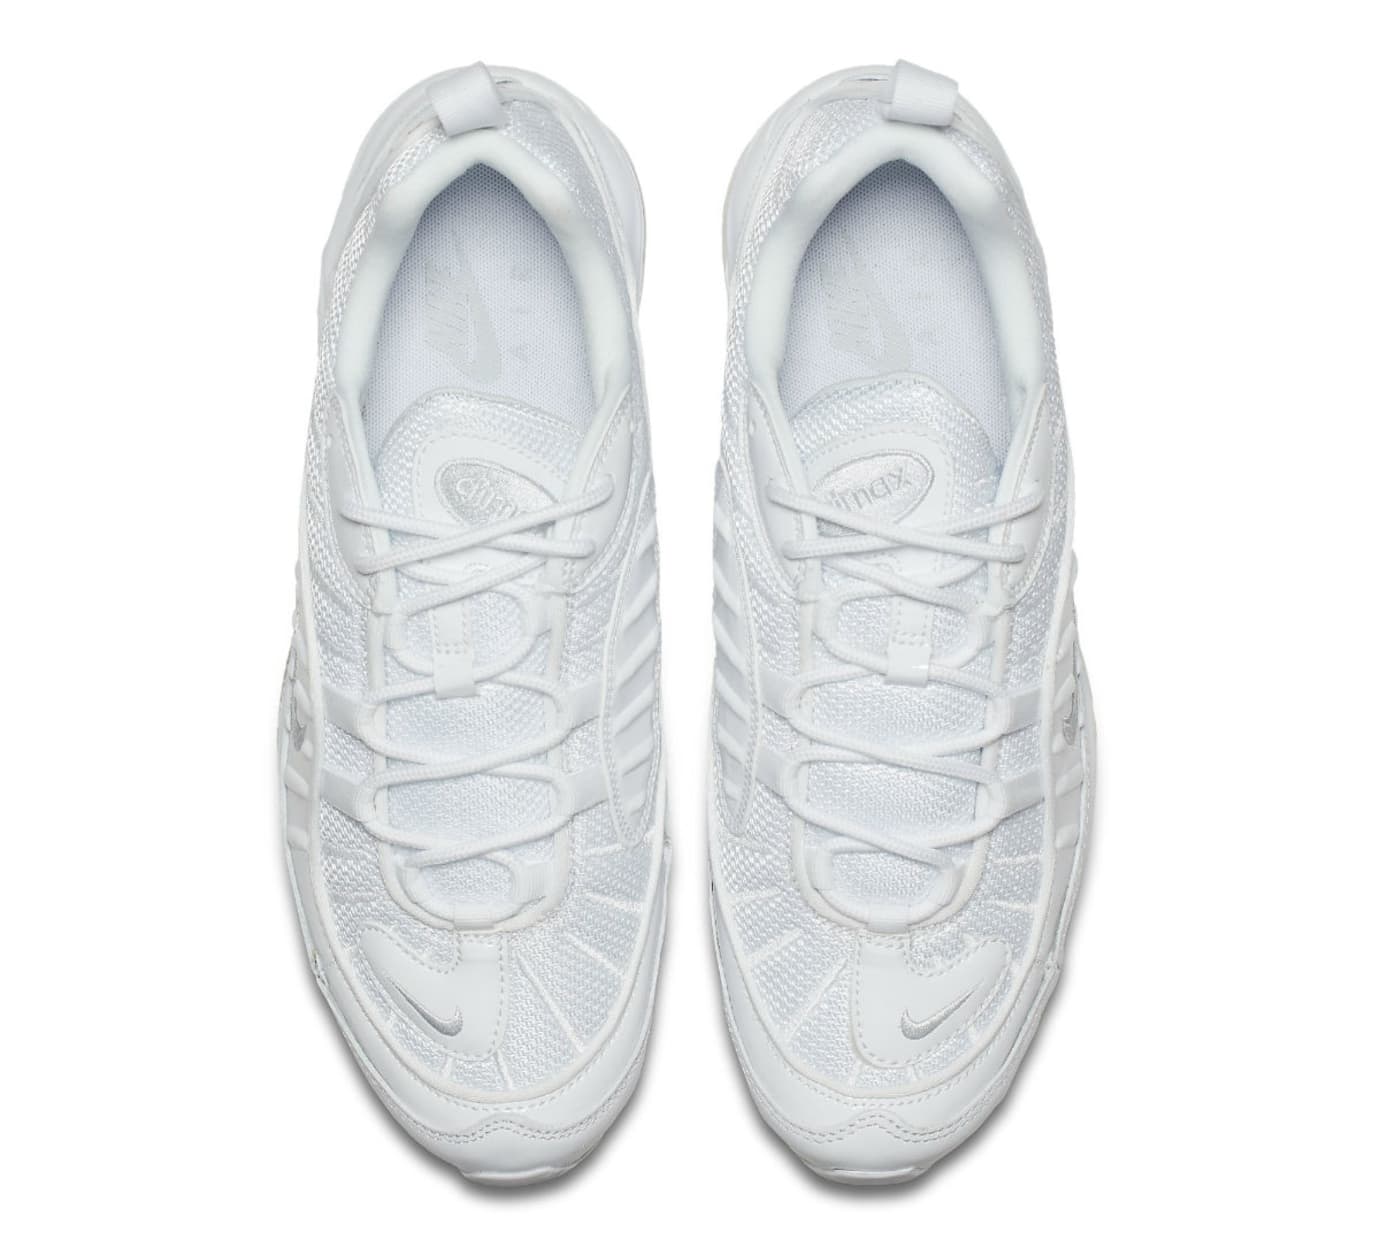 Incentivo ordenar Indefinido Nike Air Max 98 White Pure Platinum Release Date 640744-106 | Sole Collector